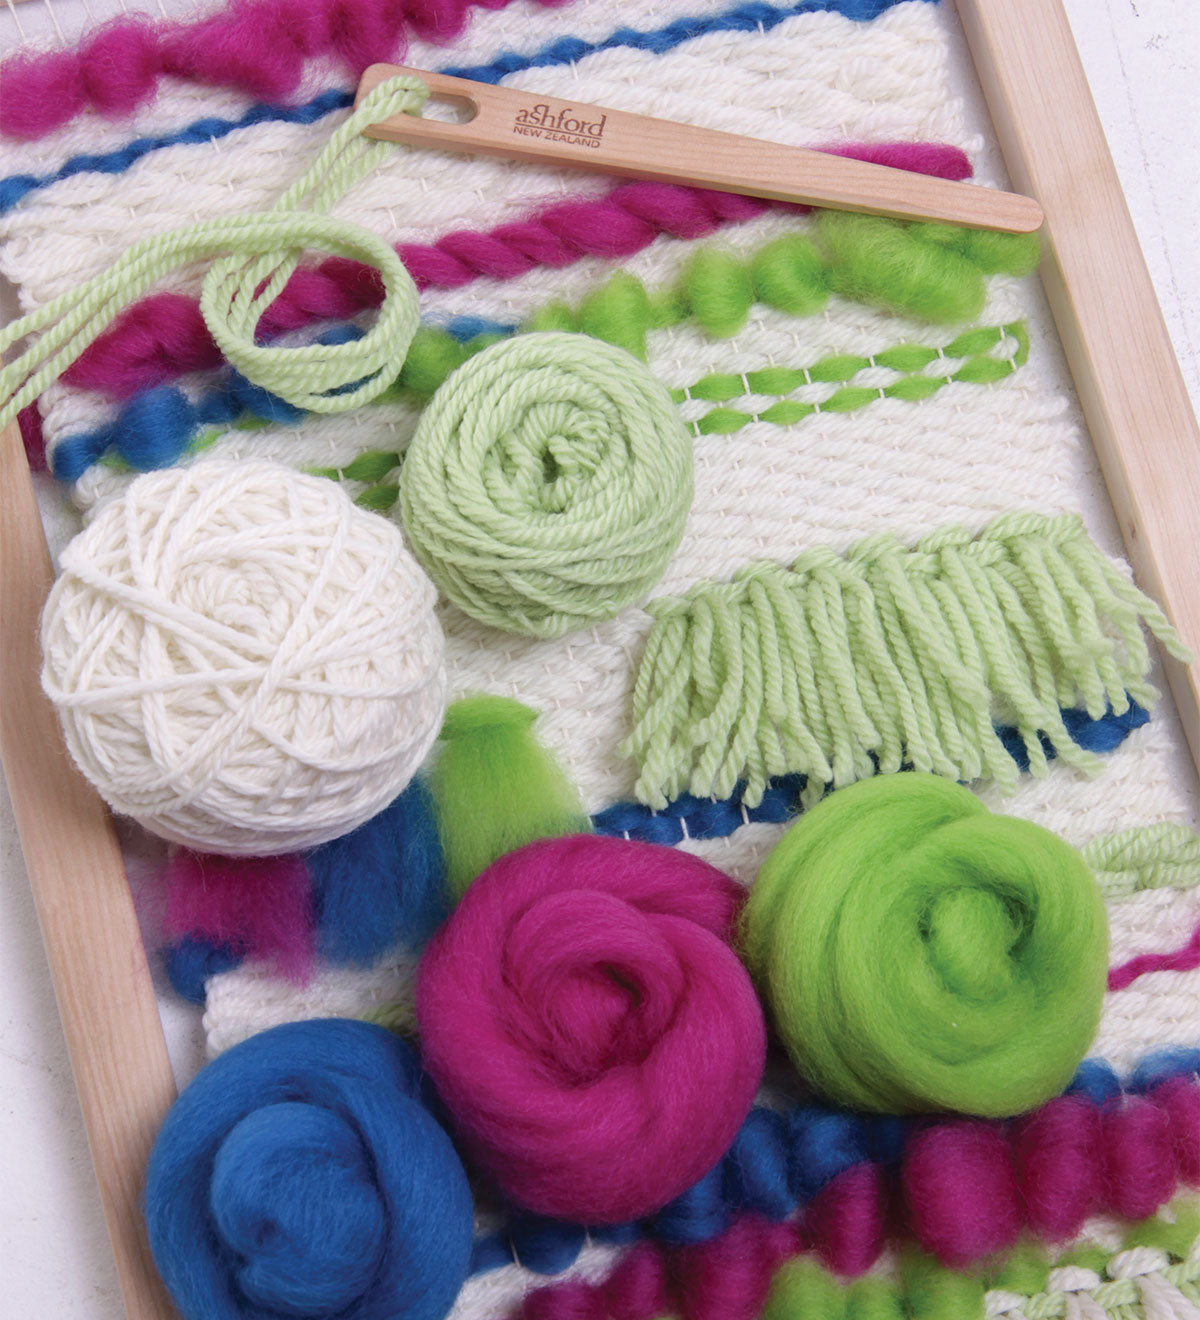 ashford weaving kits for beginngers - Thread Collective Australia